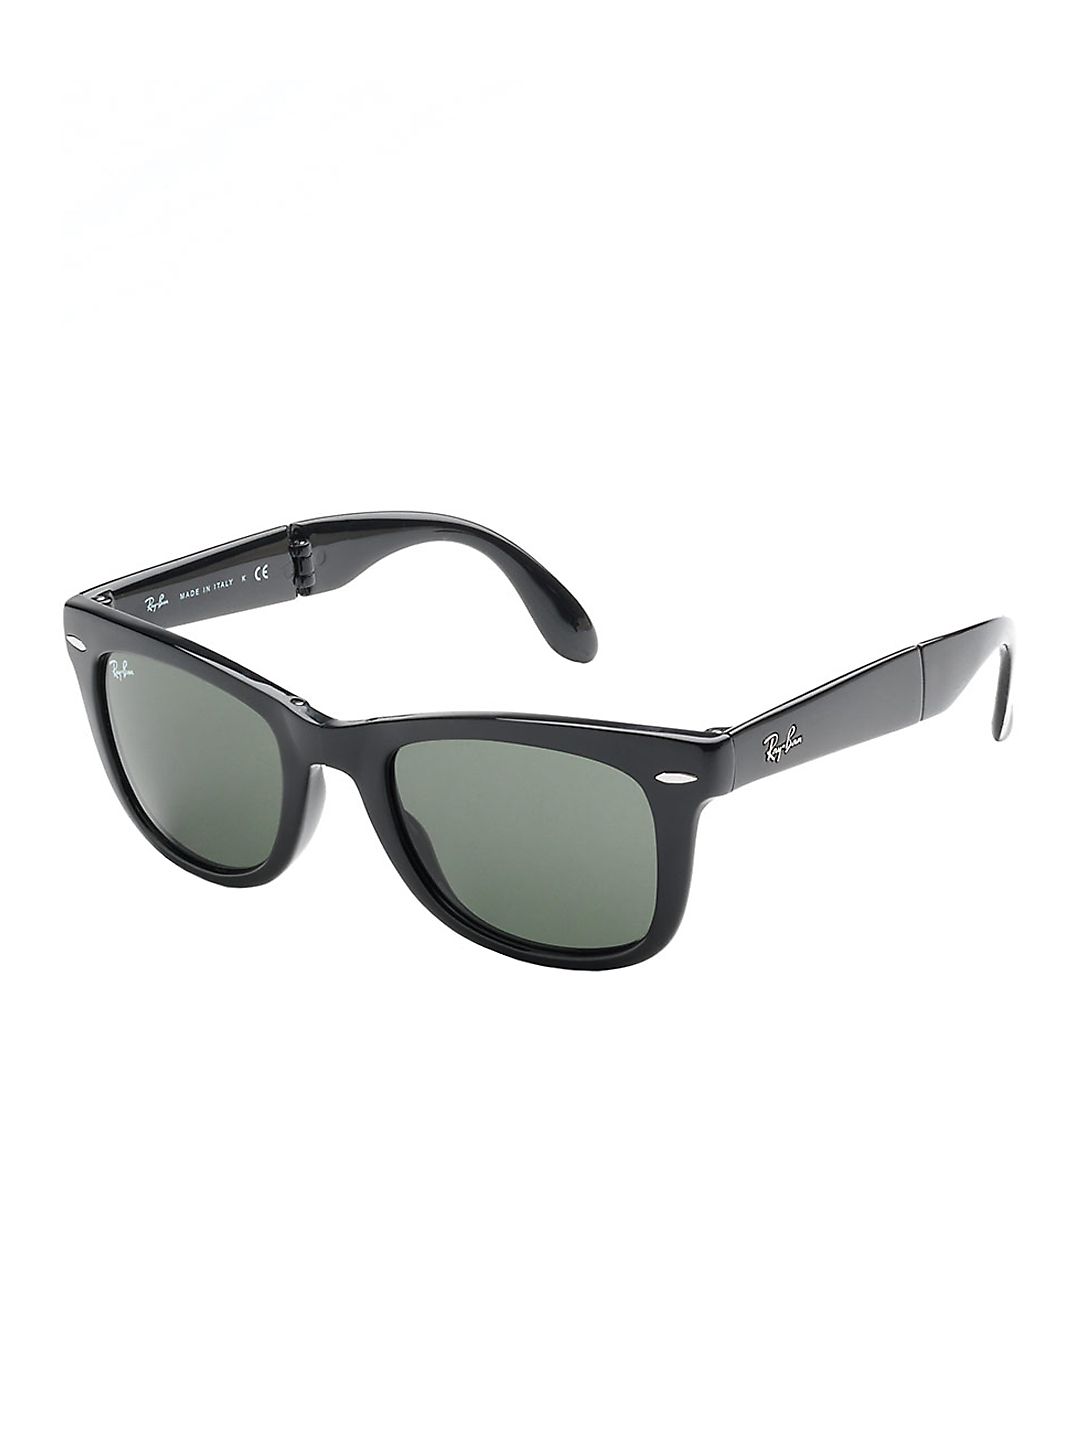 Folding Wayfarer Sunglasses - image 2 of 2